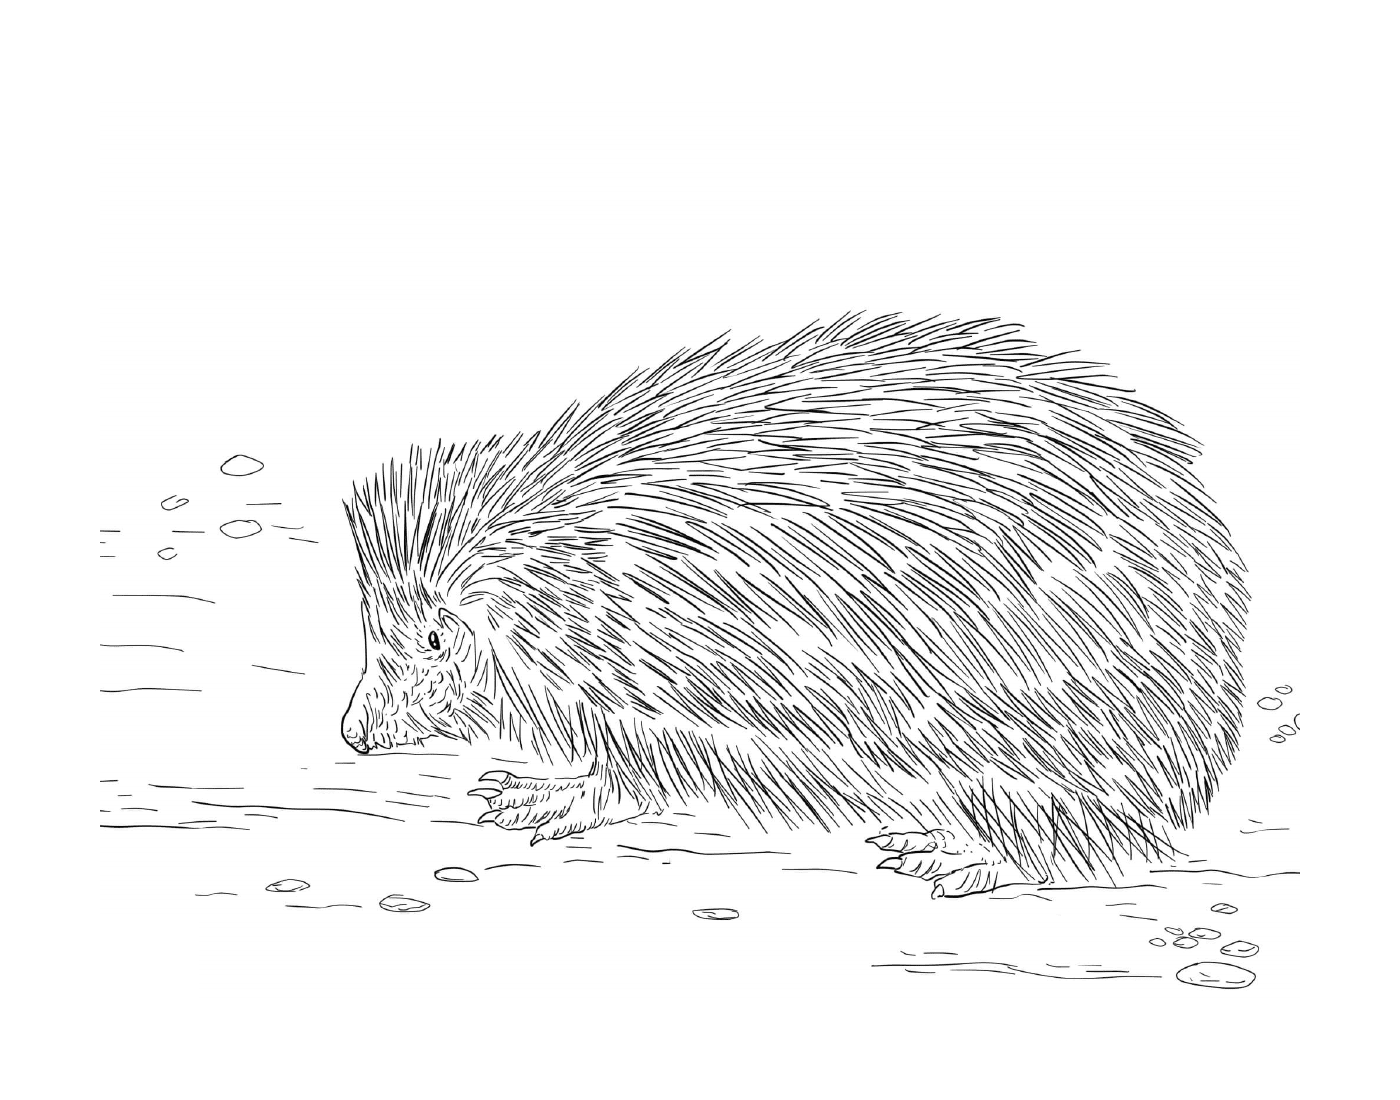  Big hedgehog in the snow 